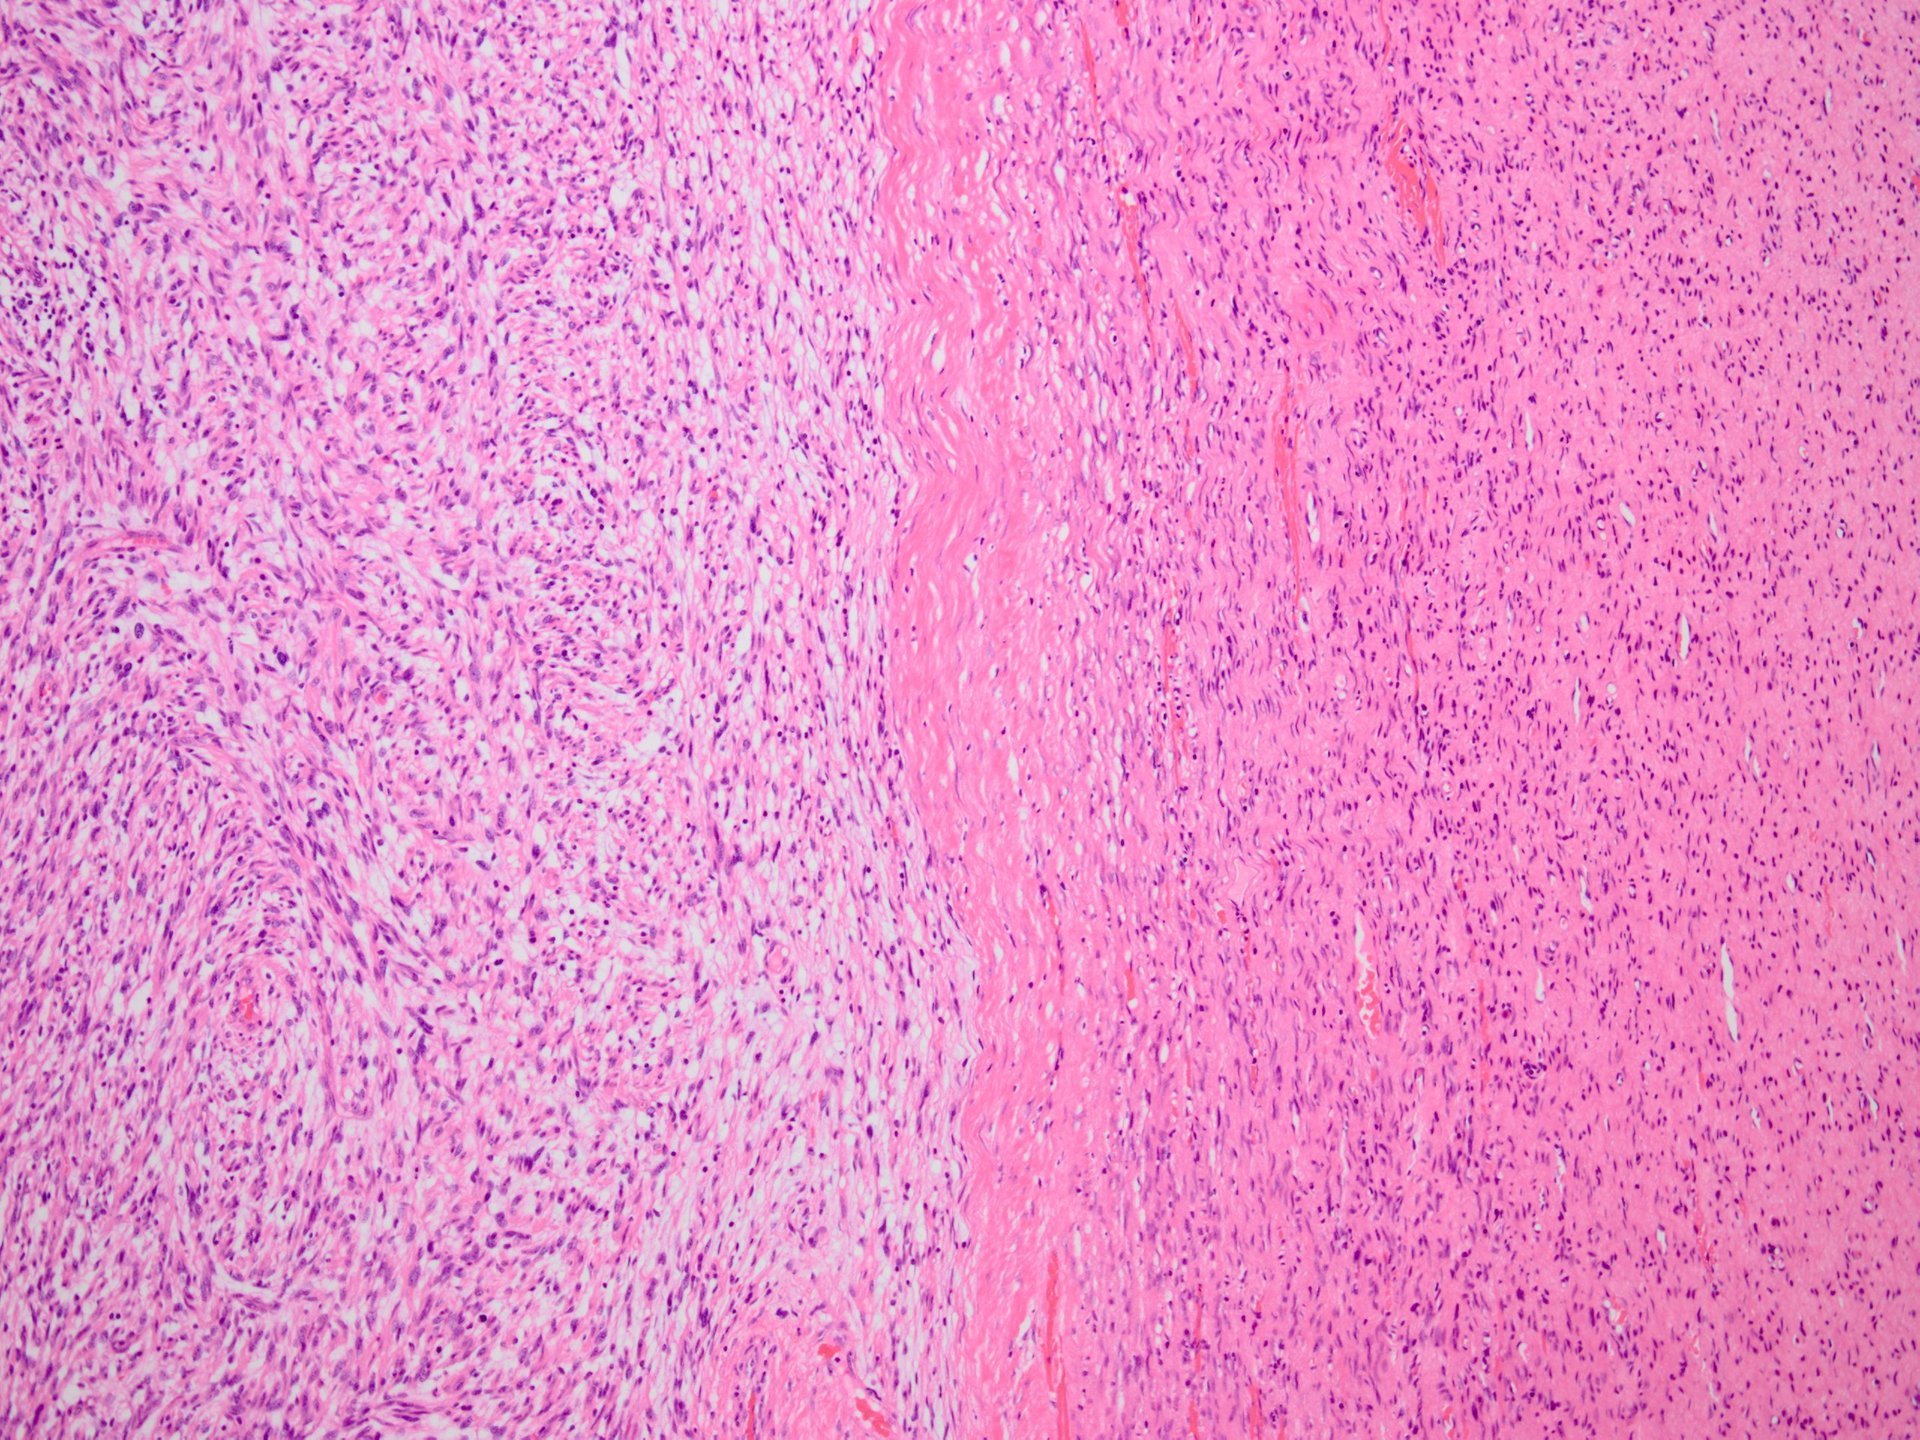 Low-grade malignant peripheral nerve sheath tumor (MPNST) 低悪性度悪性末梢神経鞘腫瘍:  軟部腫瘍病理の部屋